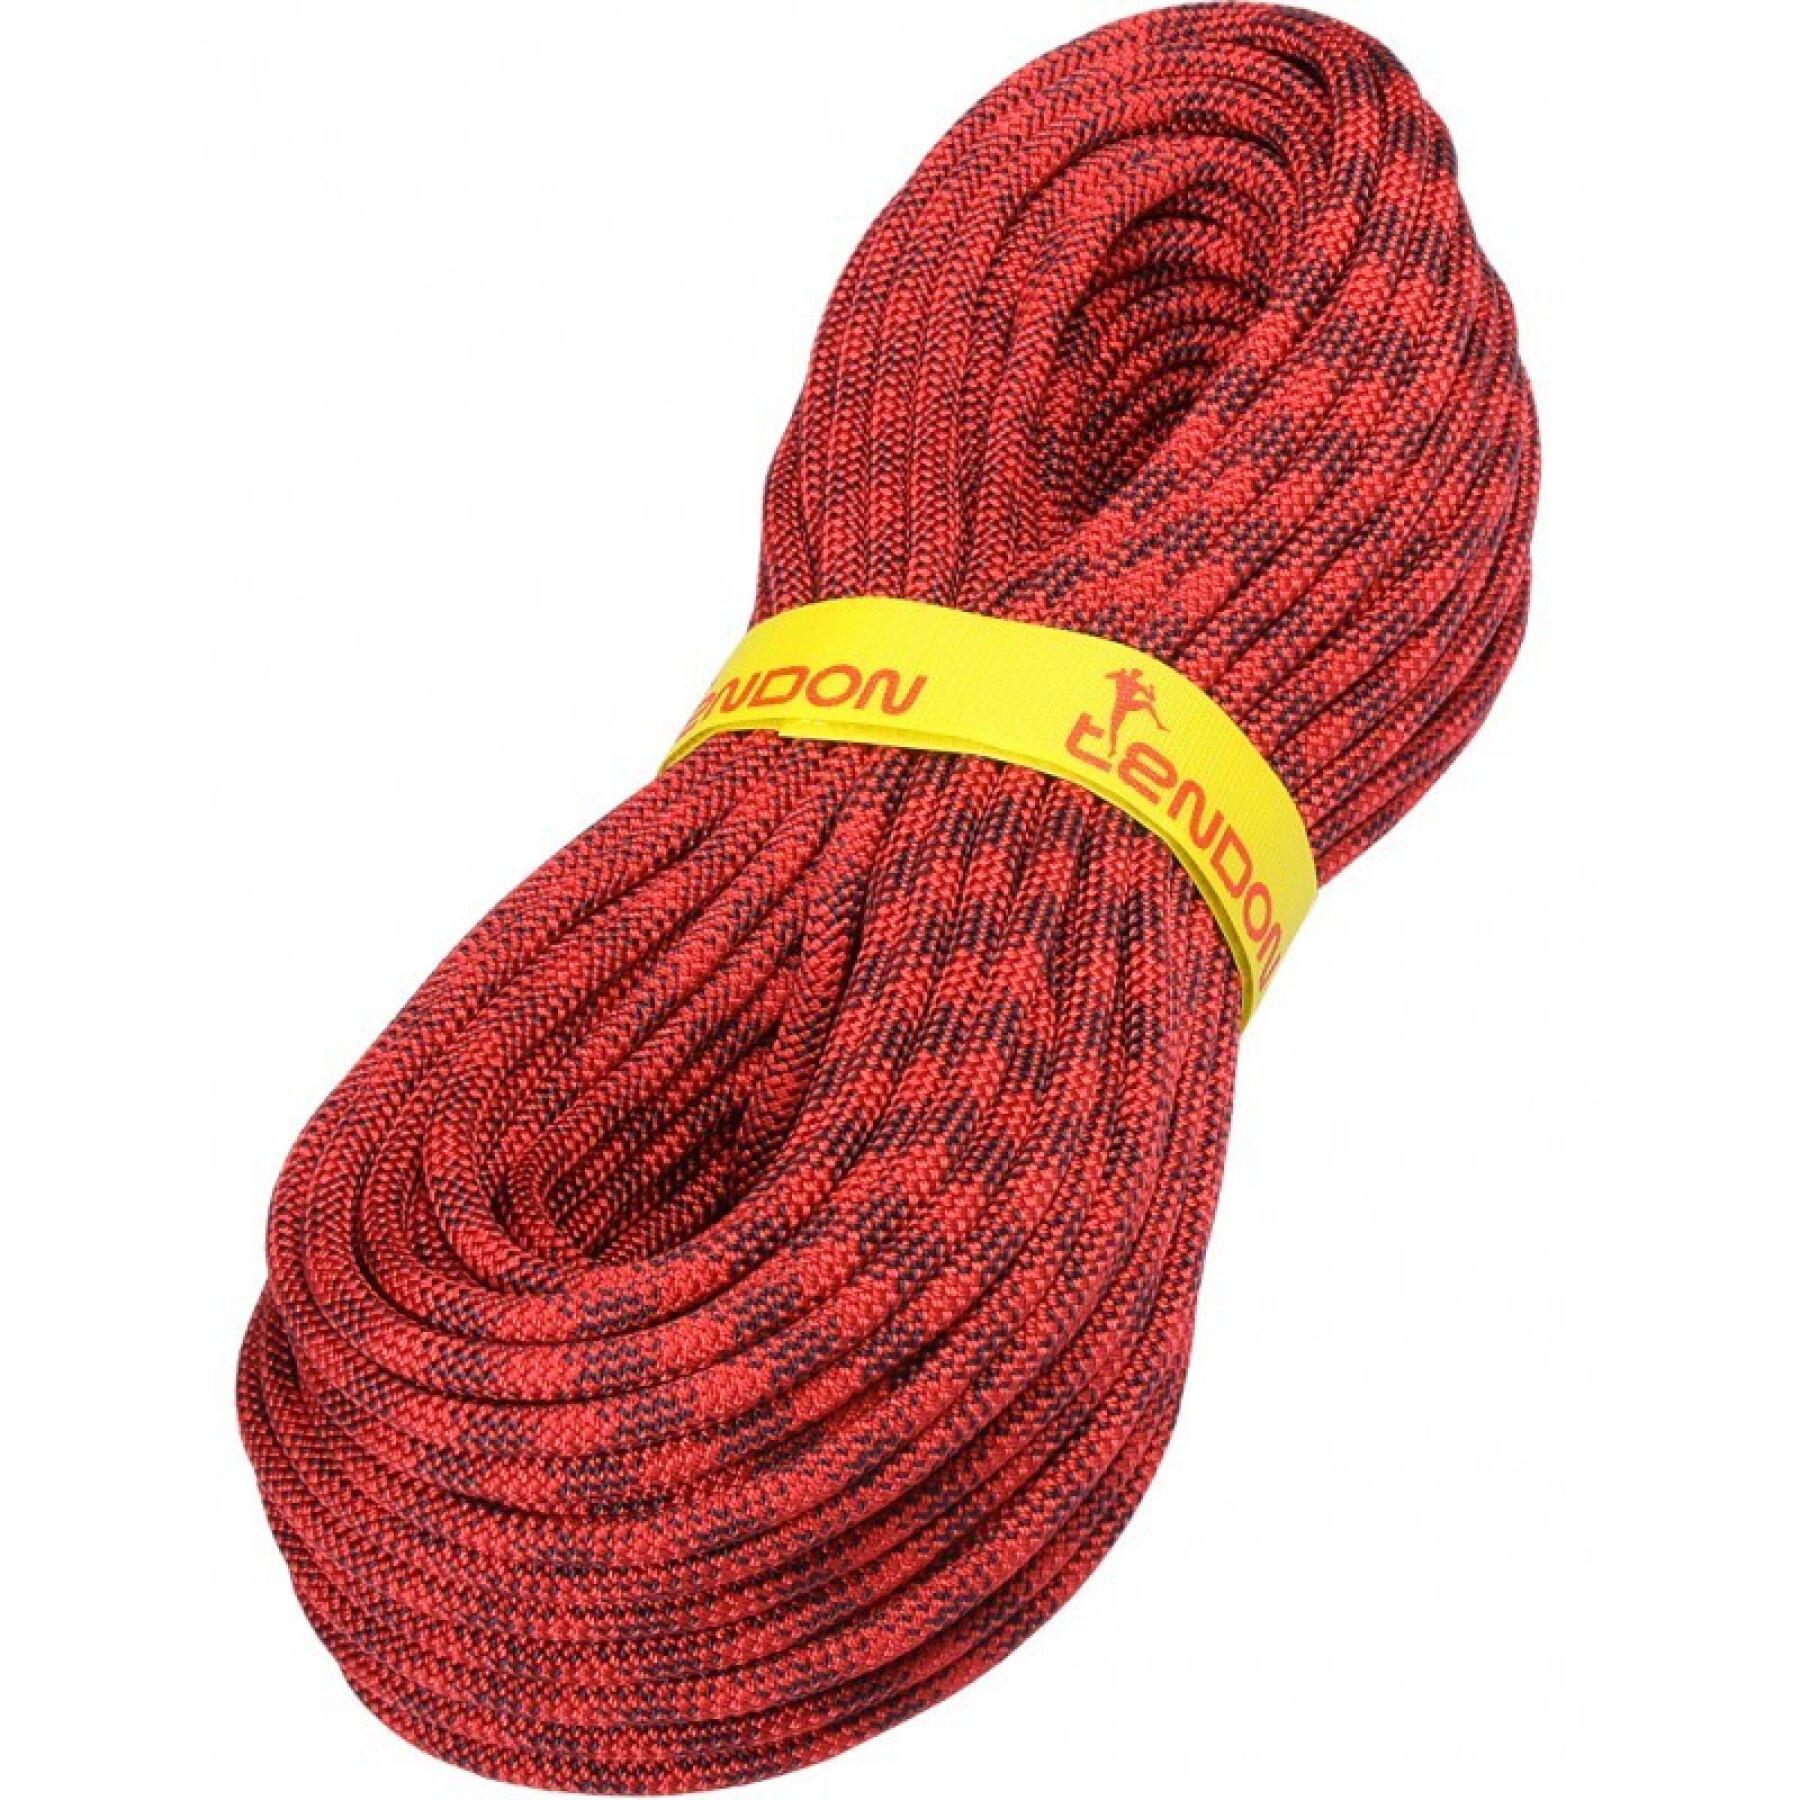 Full shield rope Tendon Alpine 7.9